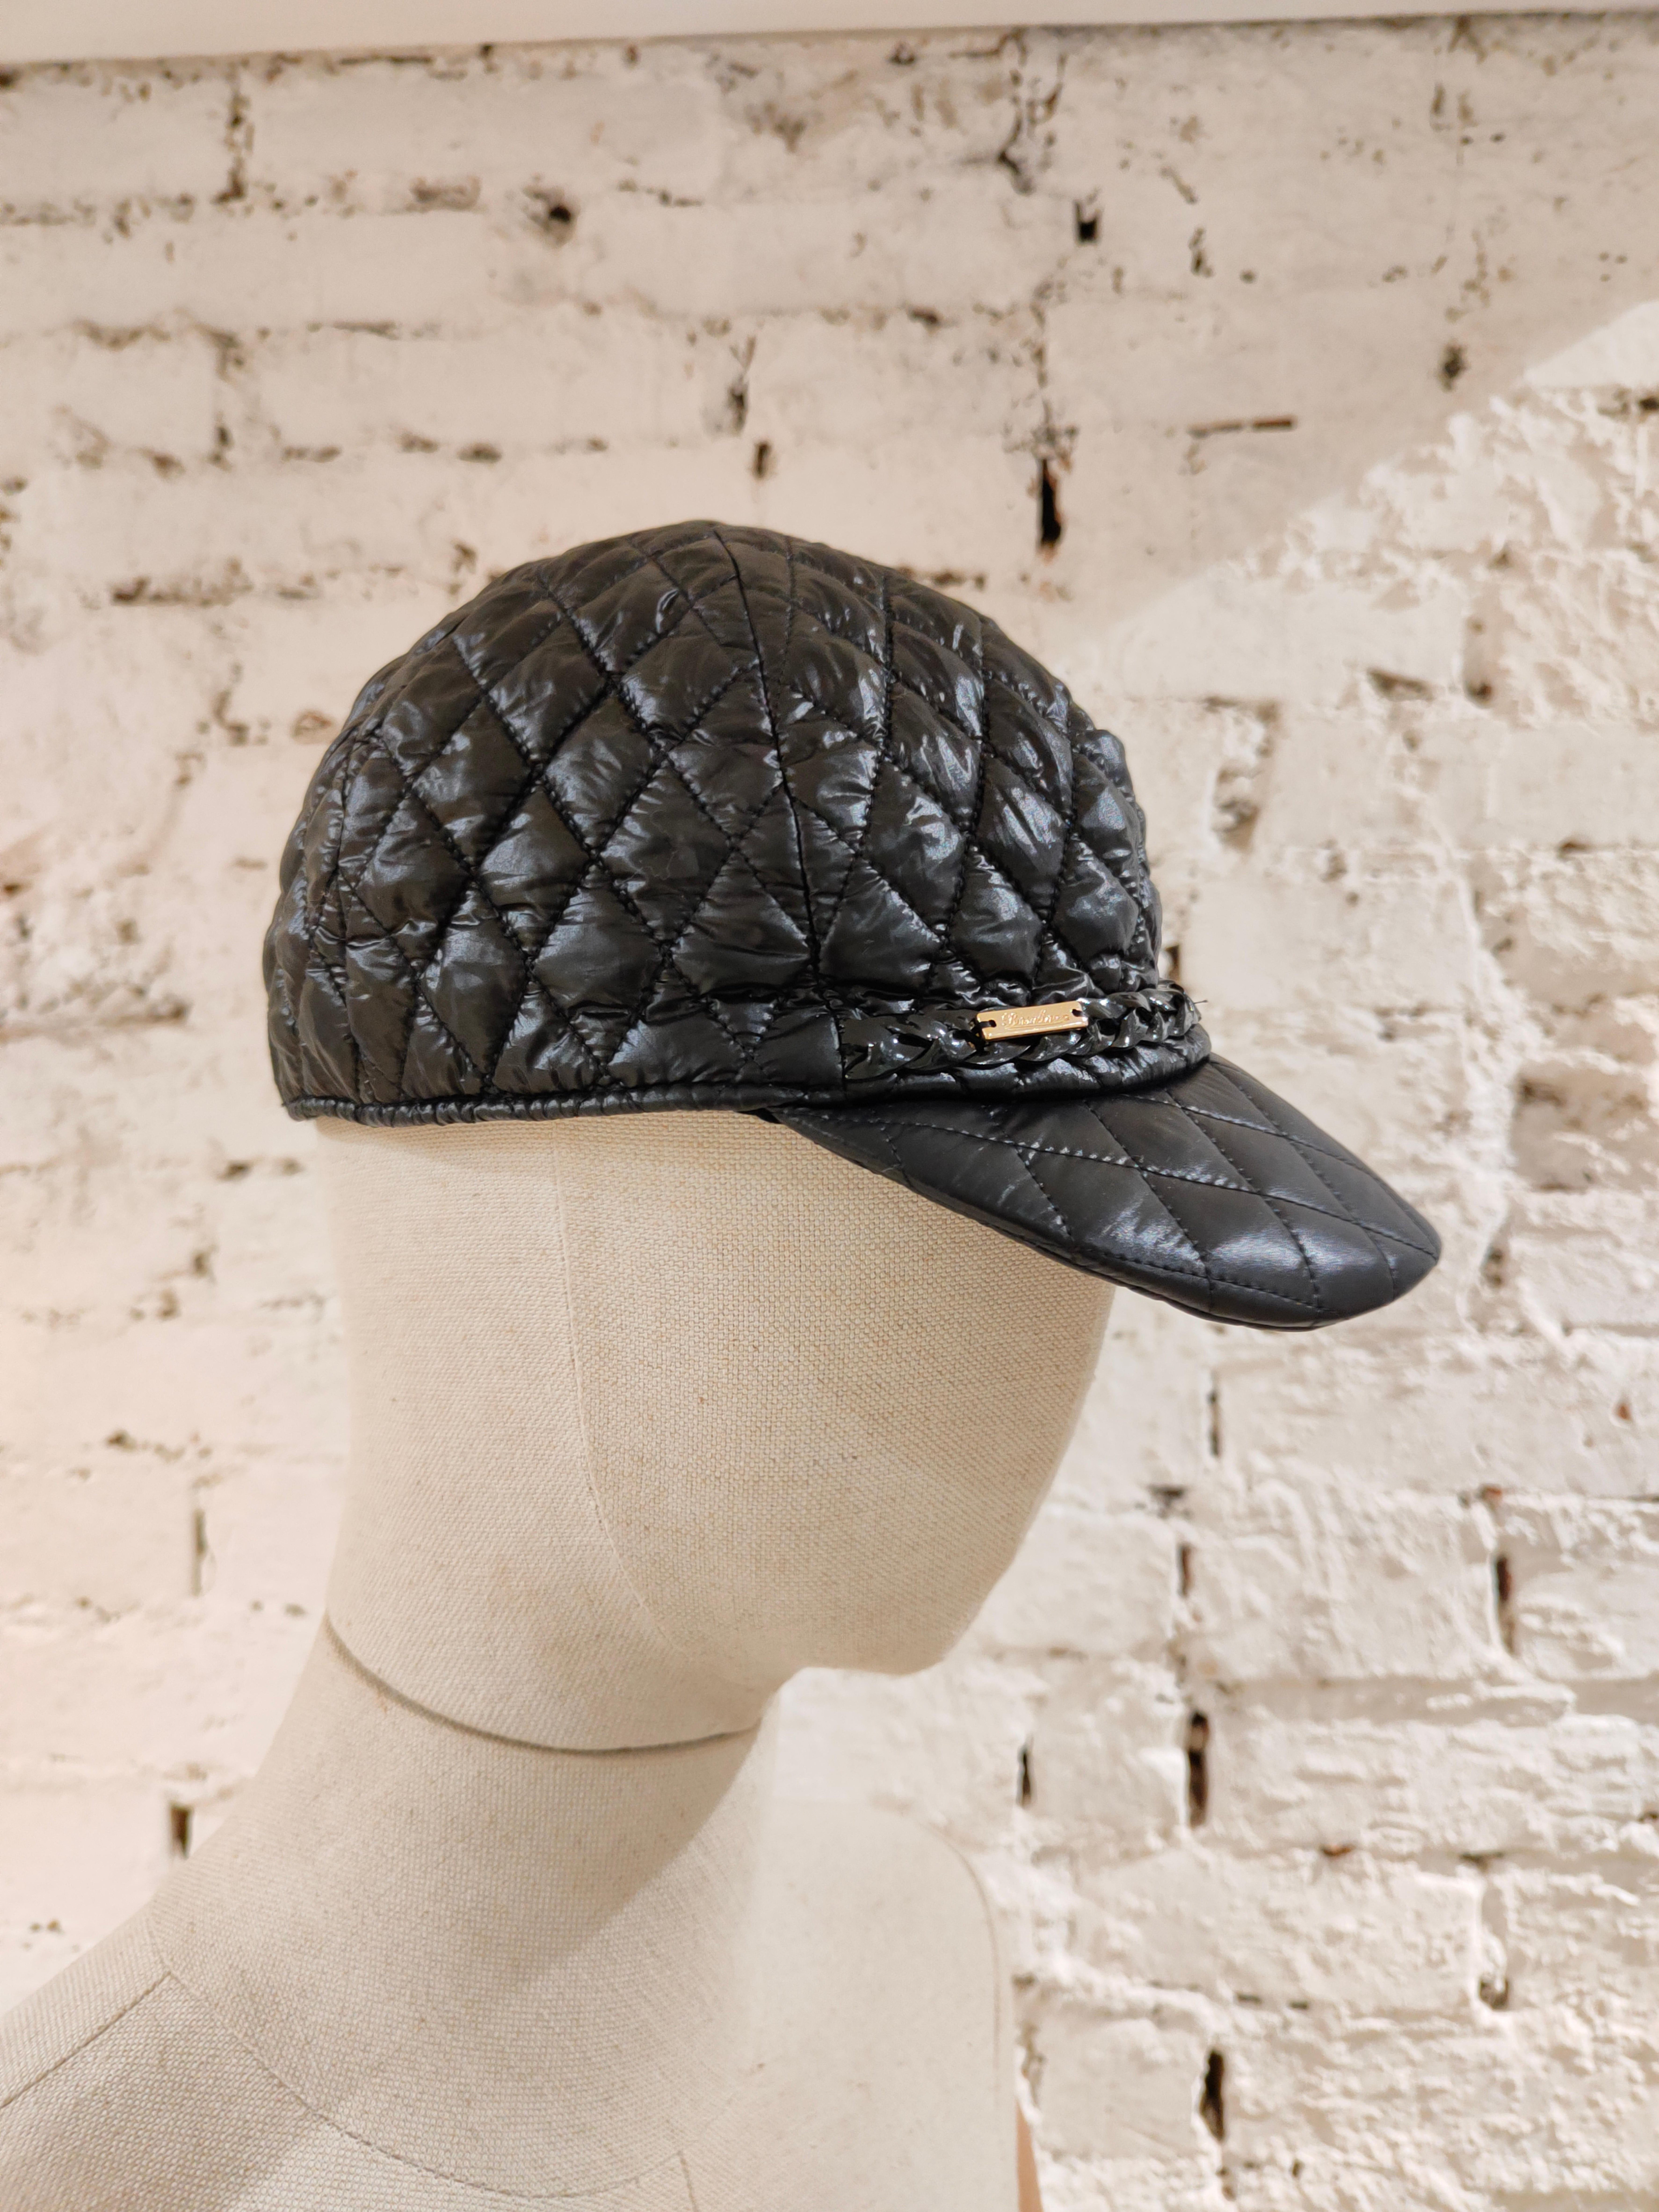 Black Borsalino black leather hat